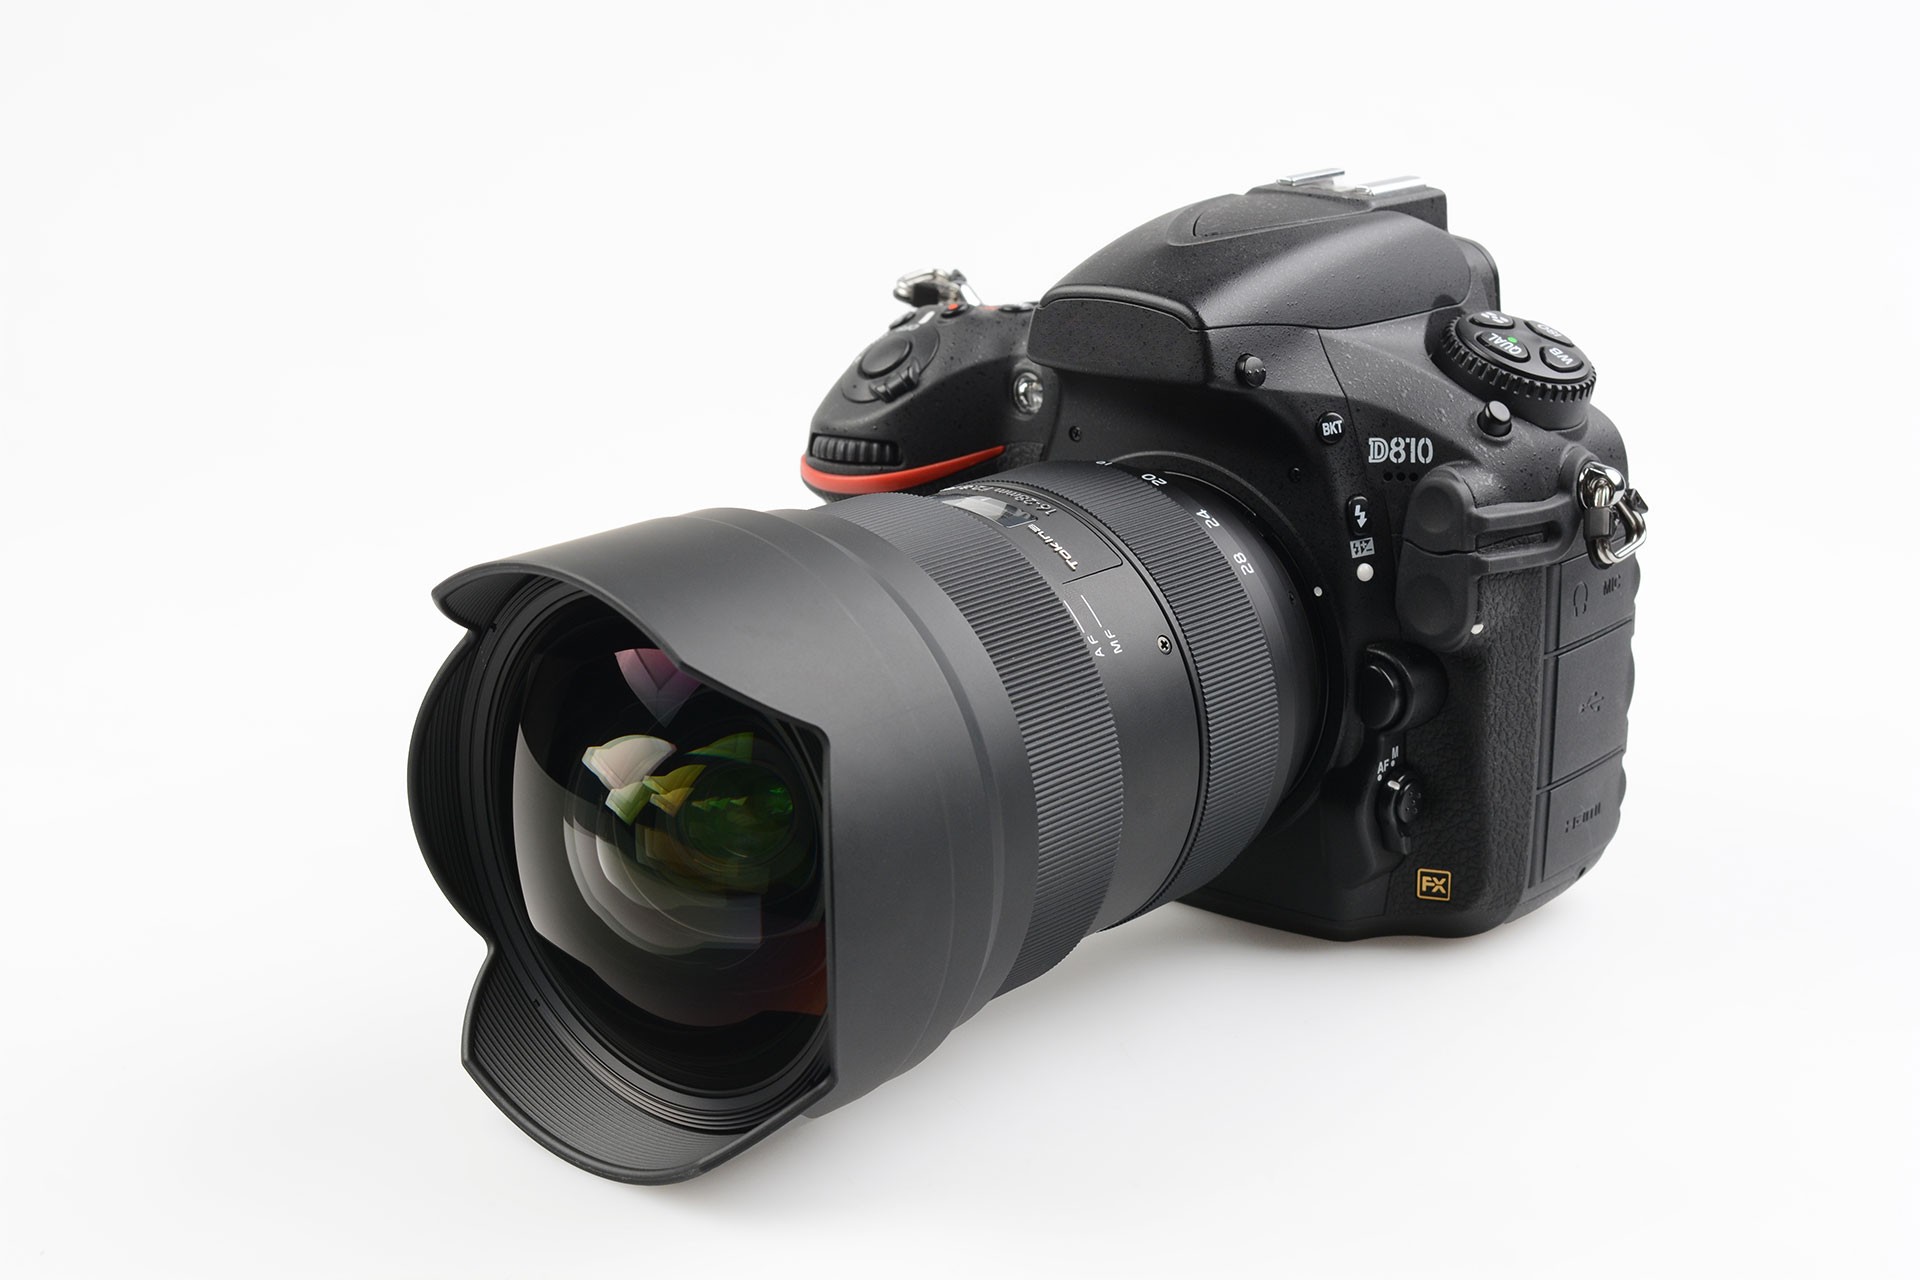 Объектив Tokina Opera 16-28mm F2.8 FF NAF для Nikon